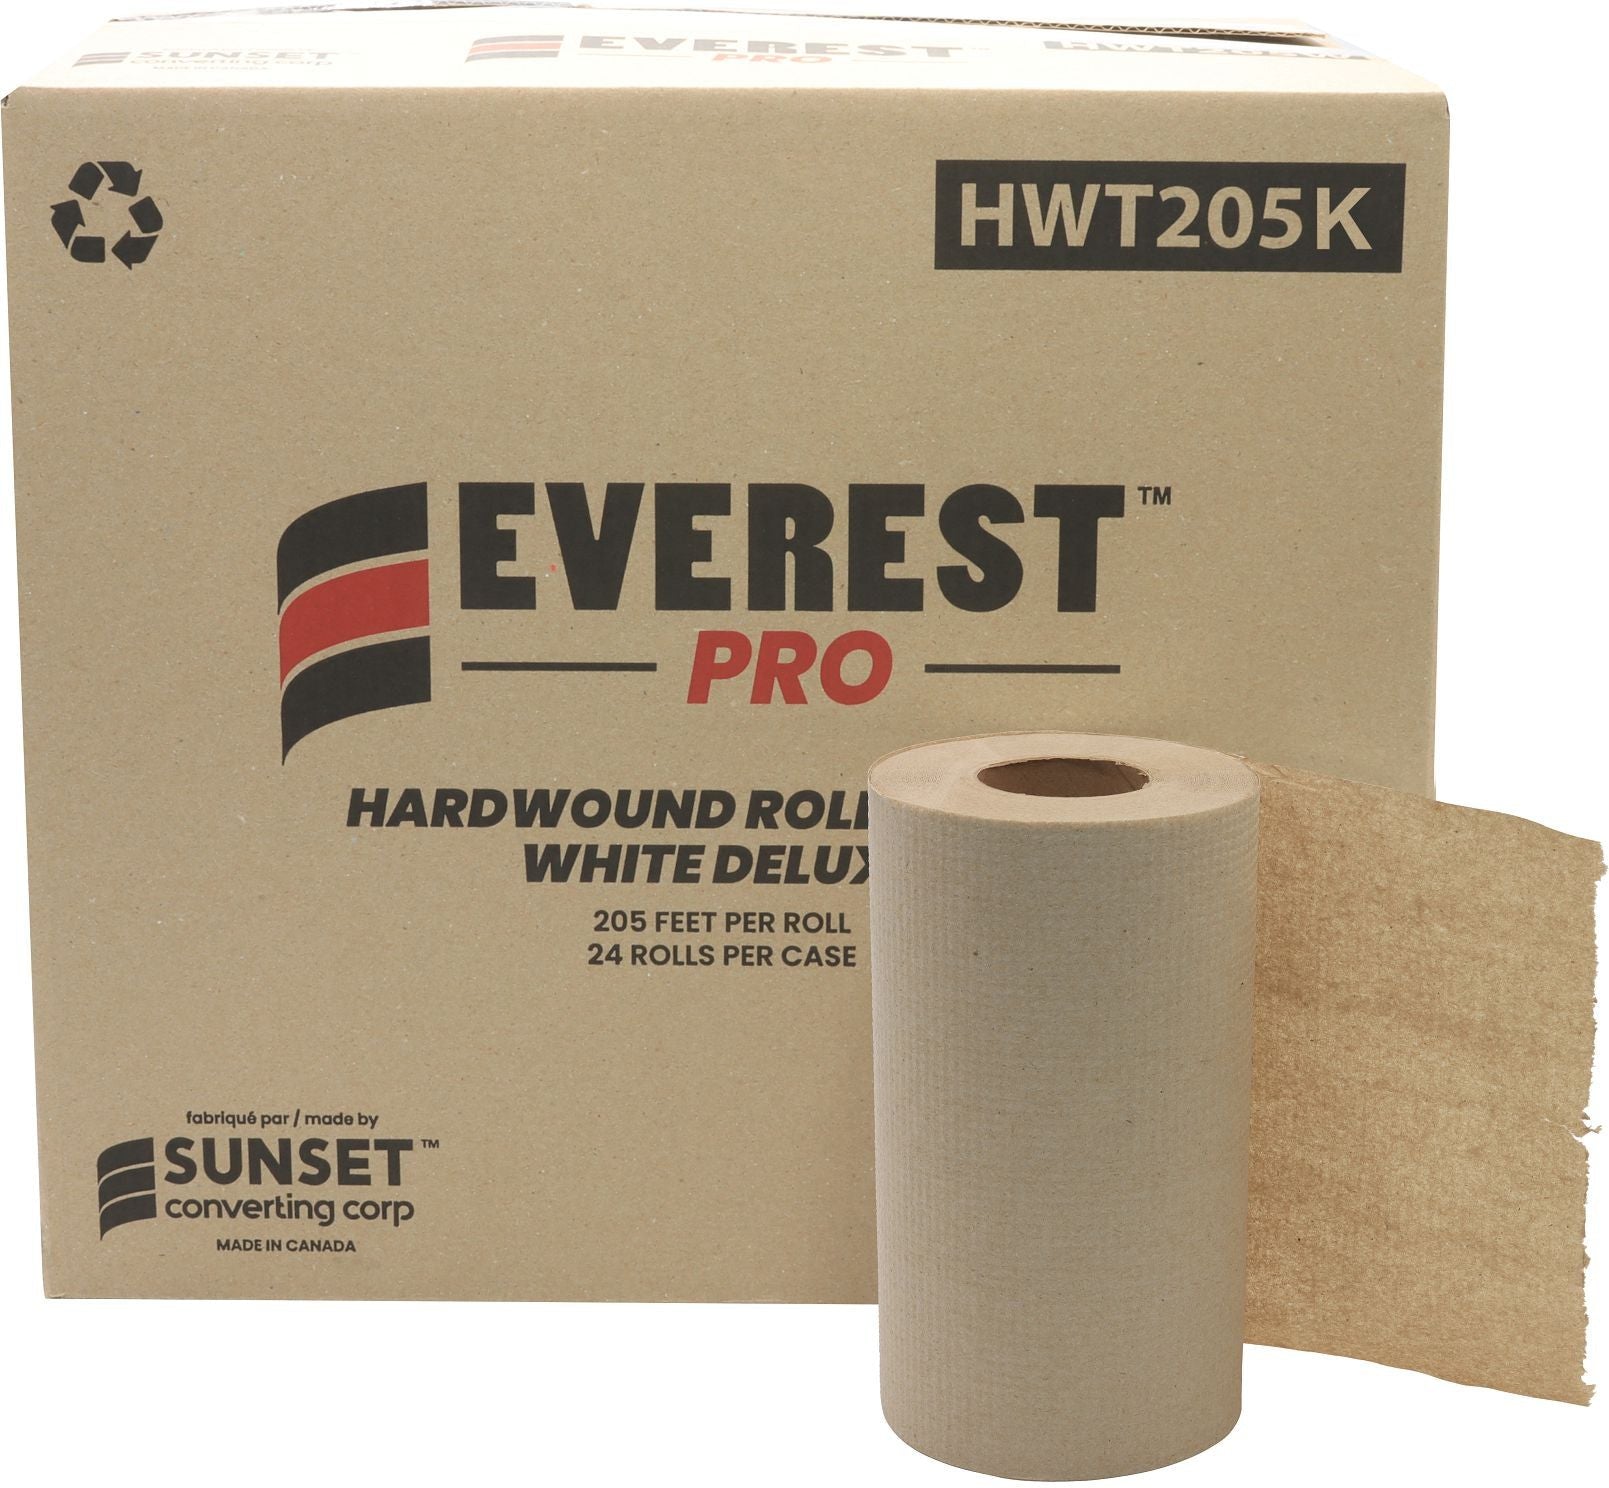 Everest Pro - 205 Feet Kraft Roll Towel, 24 Rl/Cs - HWT205K